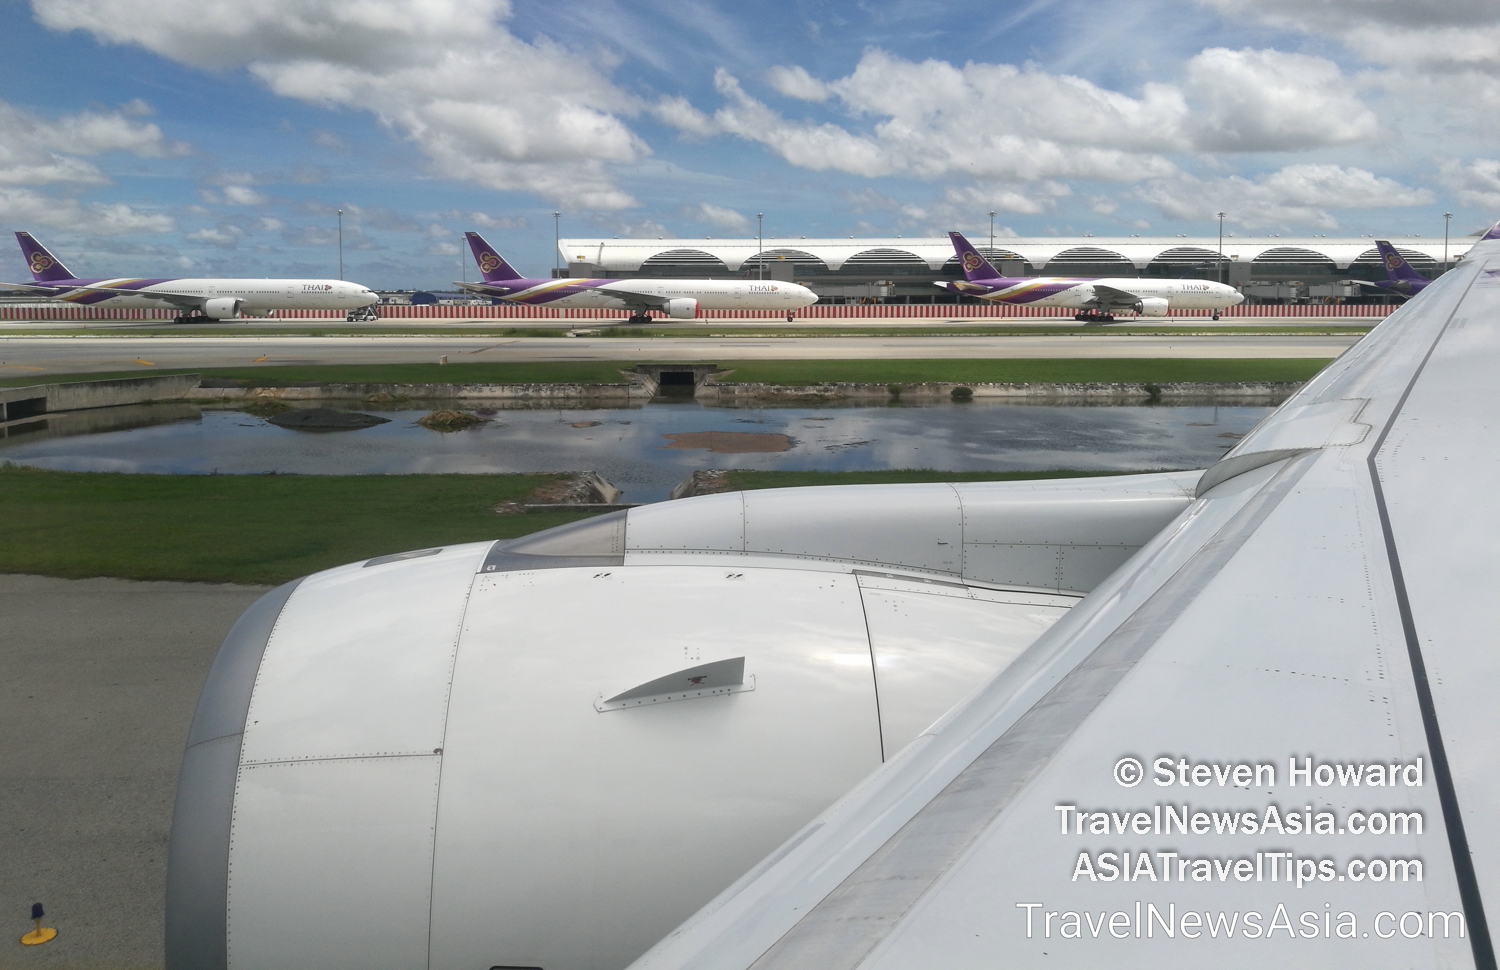 Thai Airways aircraft parked at Suvarnabhumi Airport (BKK) near Bangkok, Thailand. Picture by Steven Howard of TravelNewsAsia.com Click to enlarge.